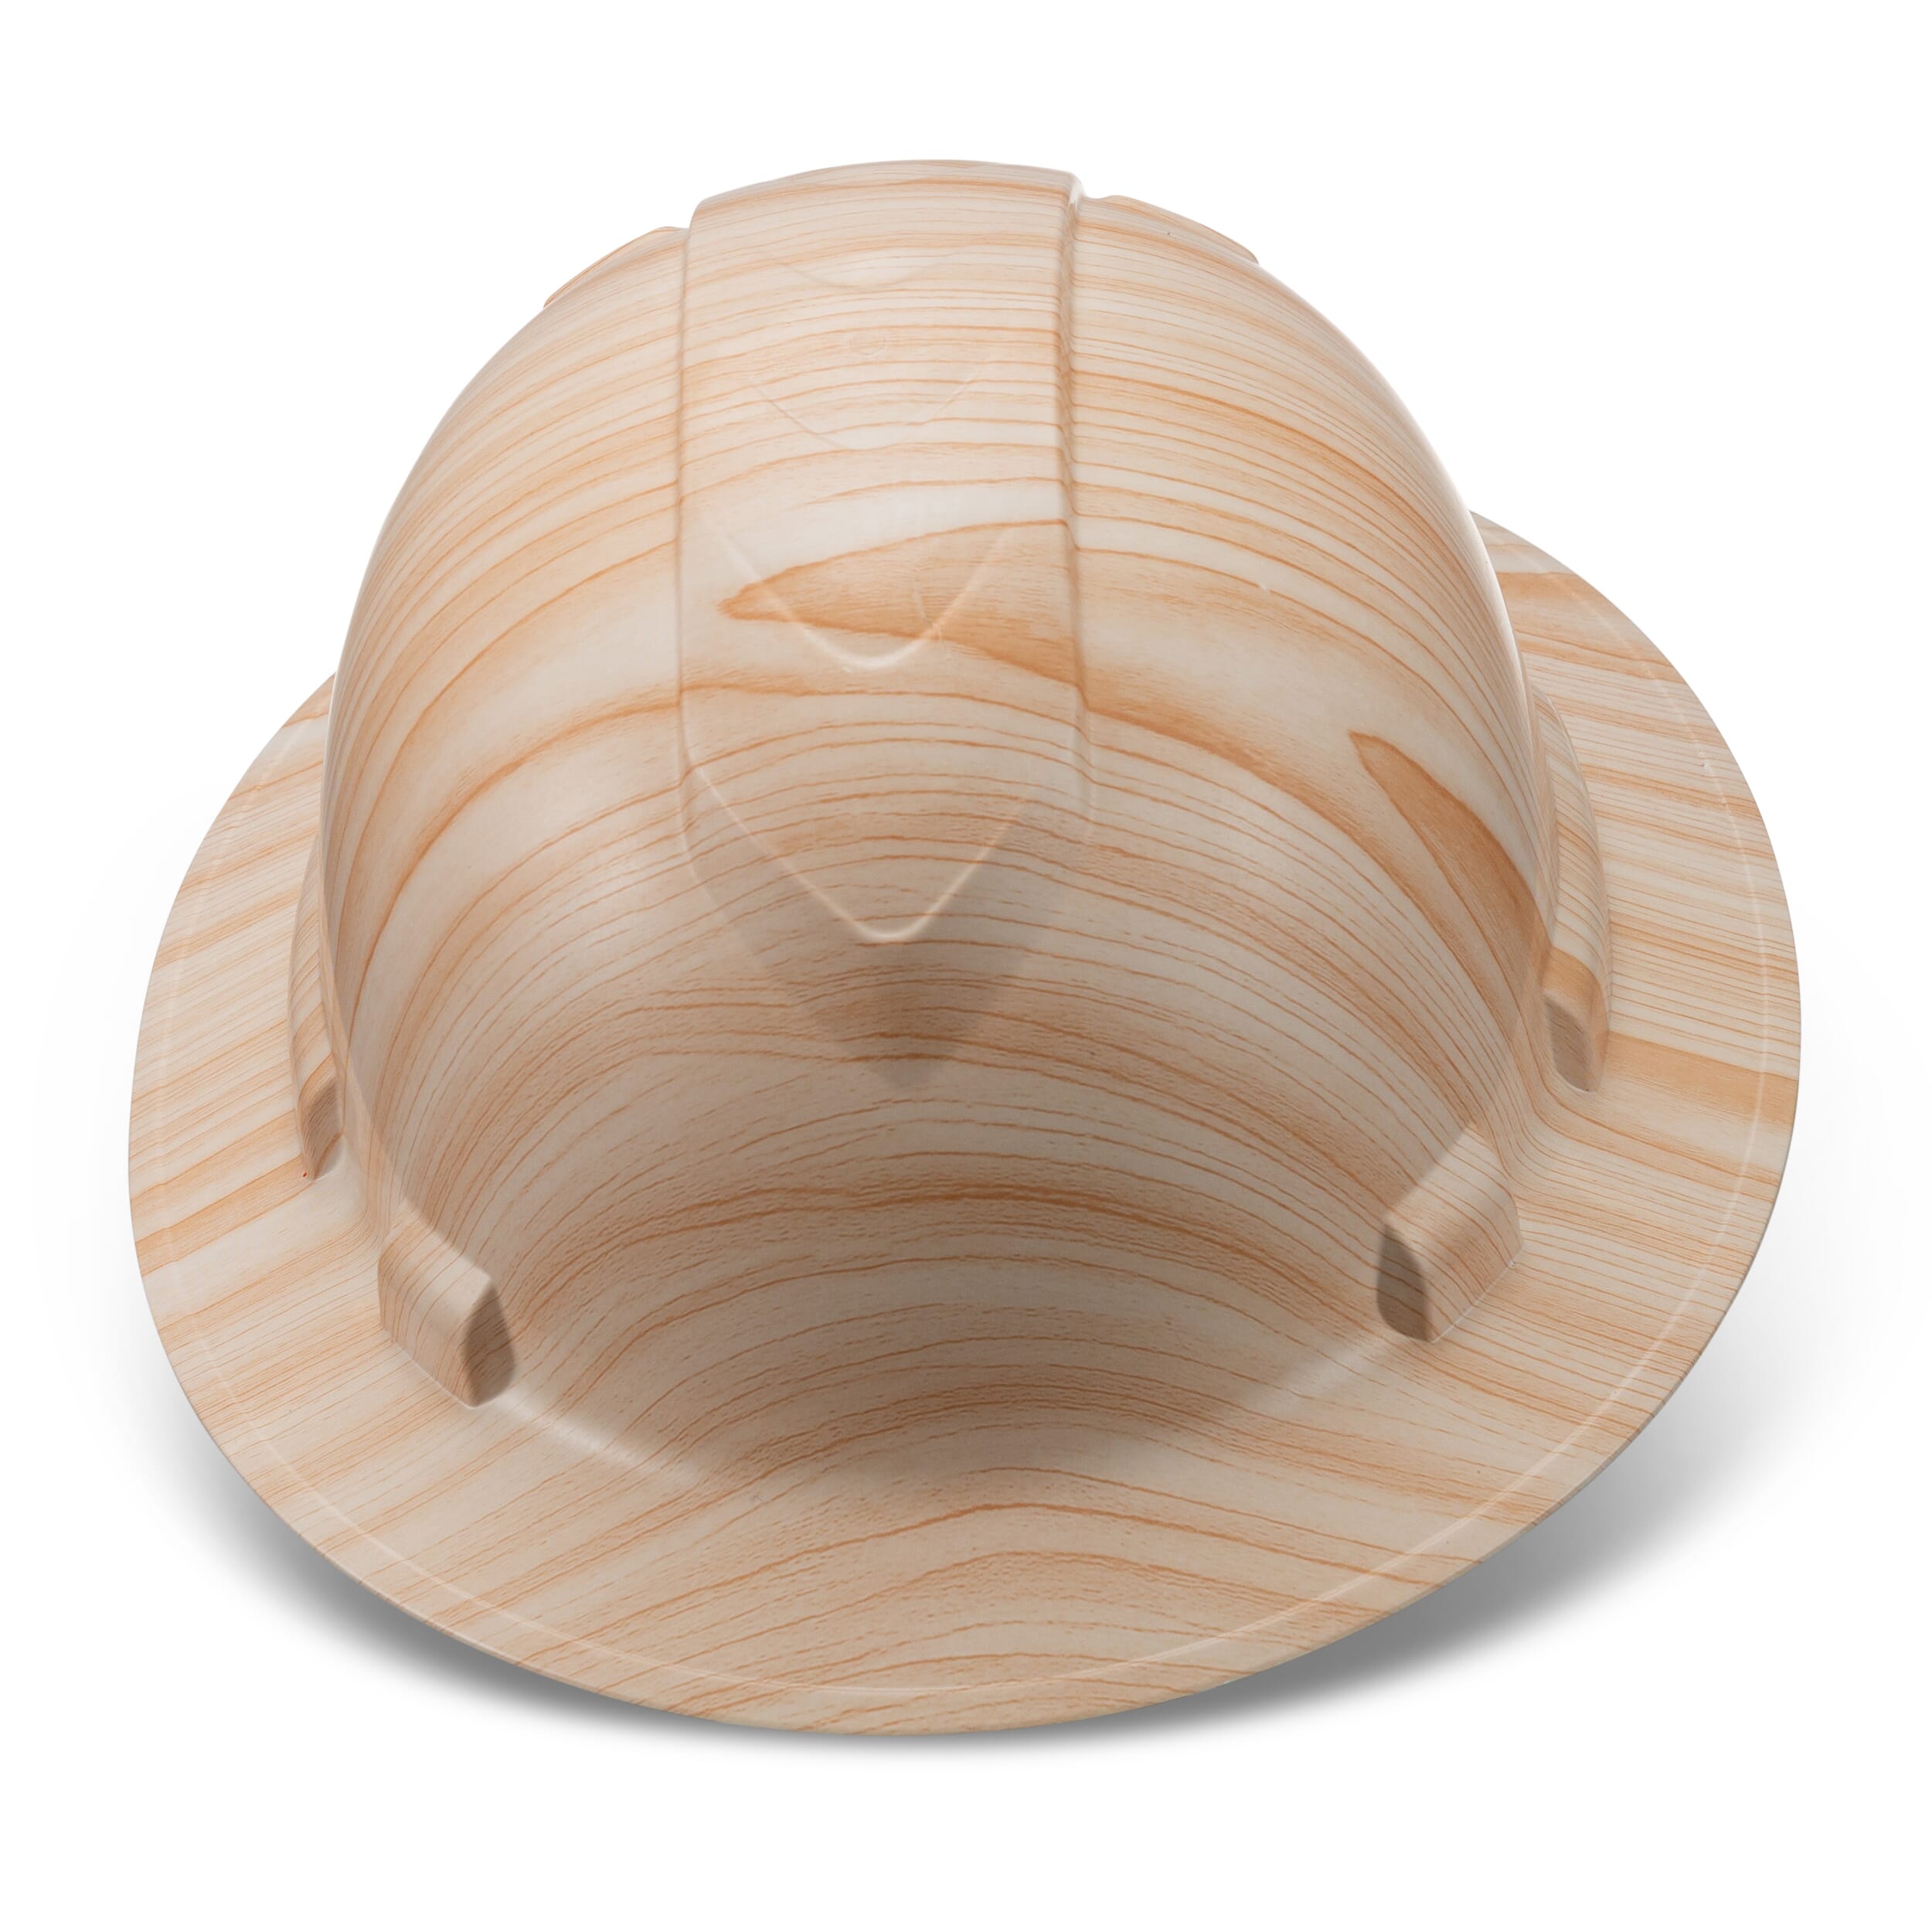 Full Brim Pyramex Hard Hat, Custom Sawdust Maverick Design, Safety Helmet, 6 Point